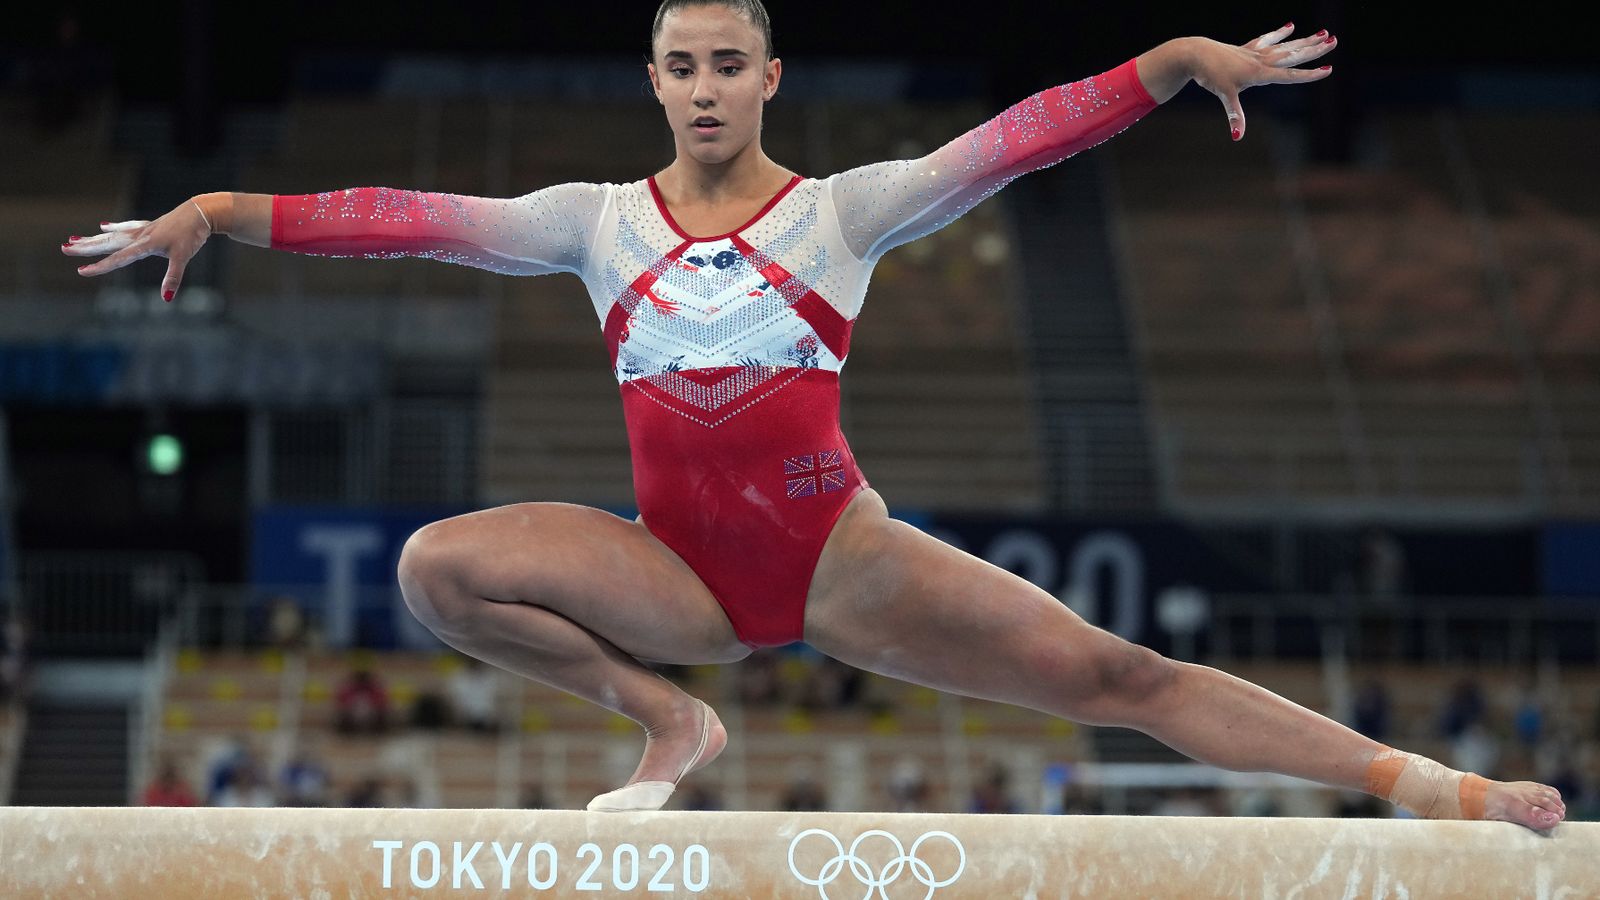 Tokyo 2020 Team GB's women's gymnastics team win Olympic bronze to